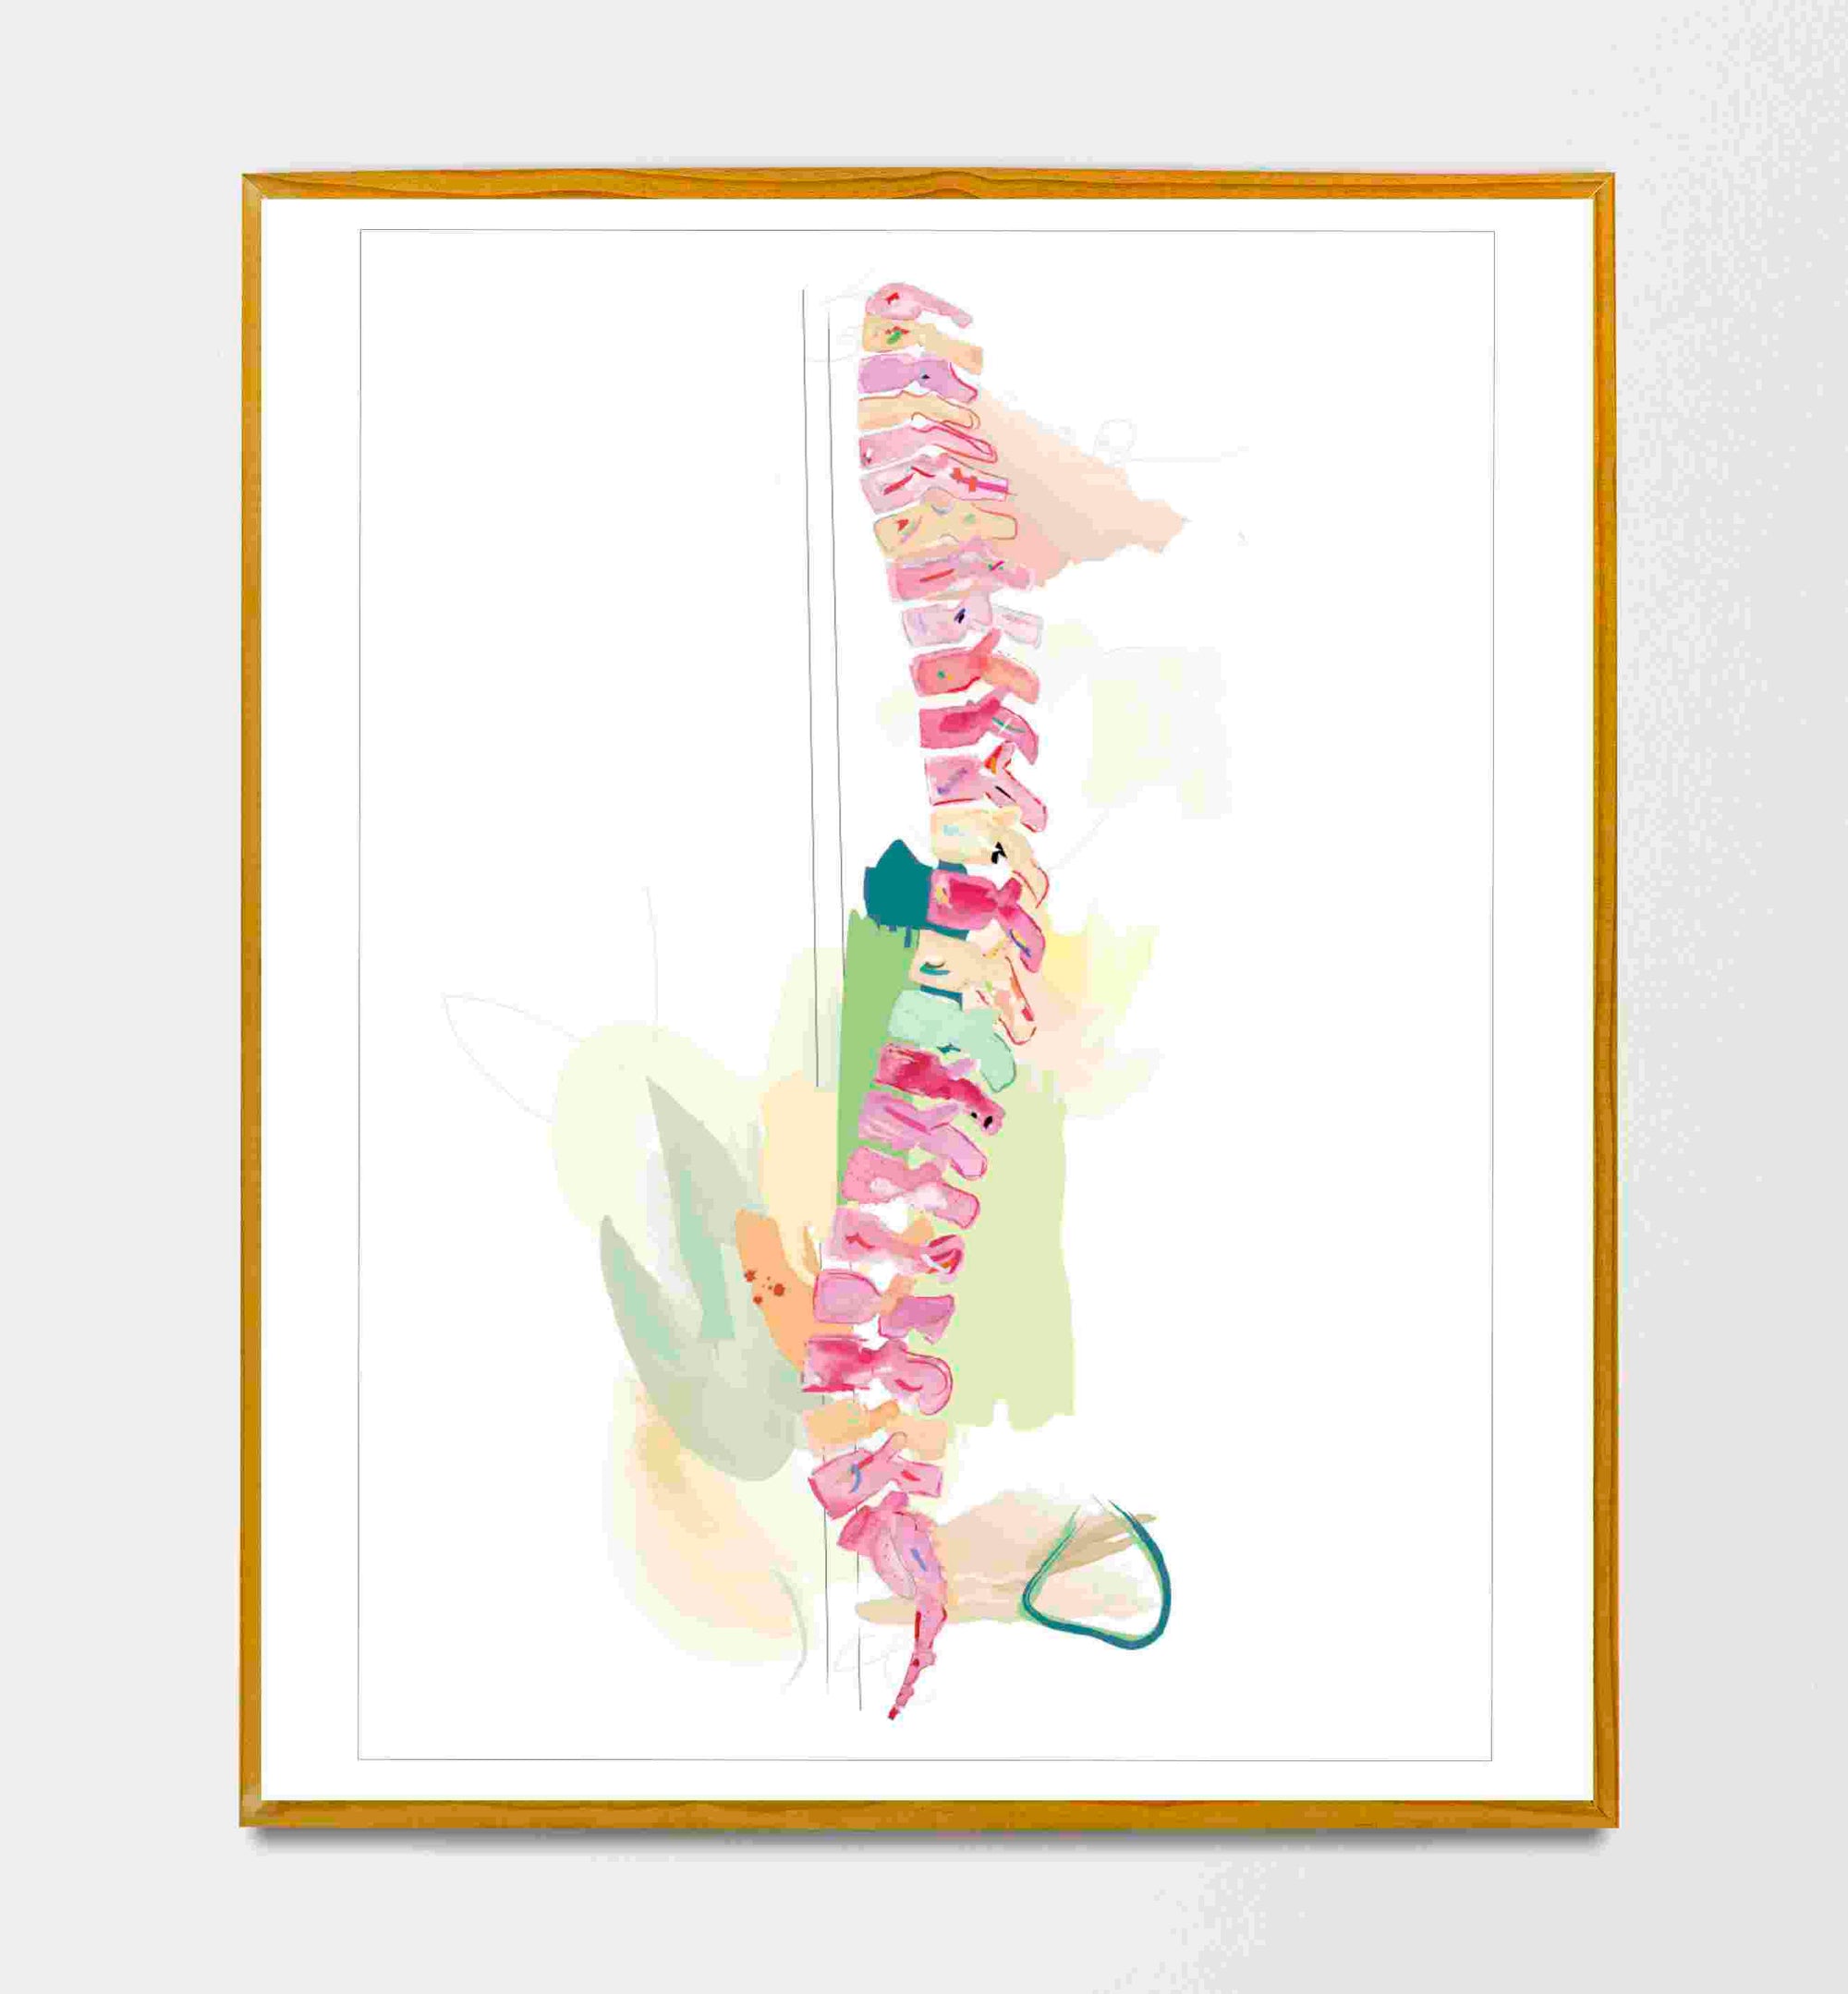 Abstract Spine Anatomy Art Print